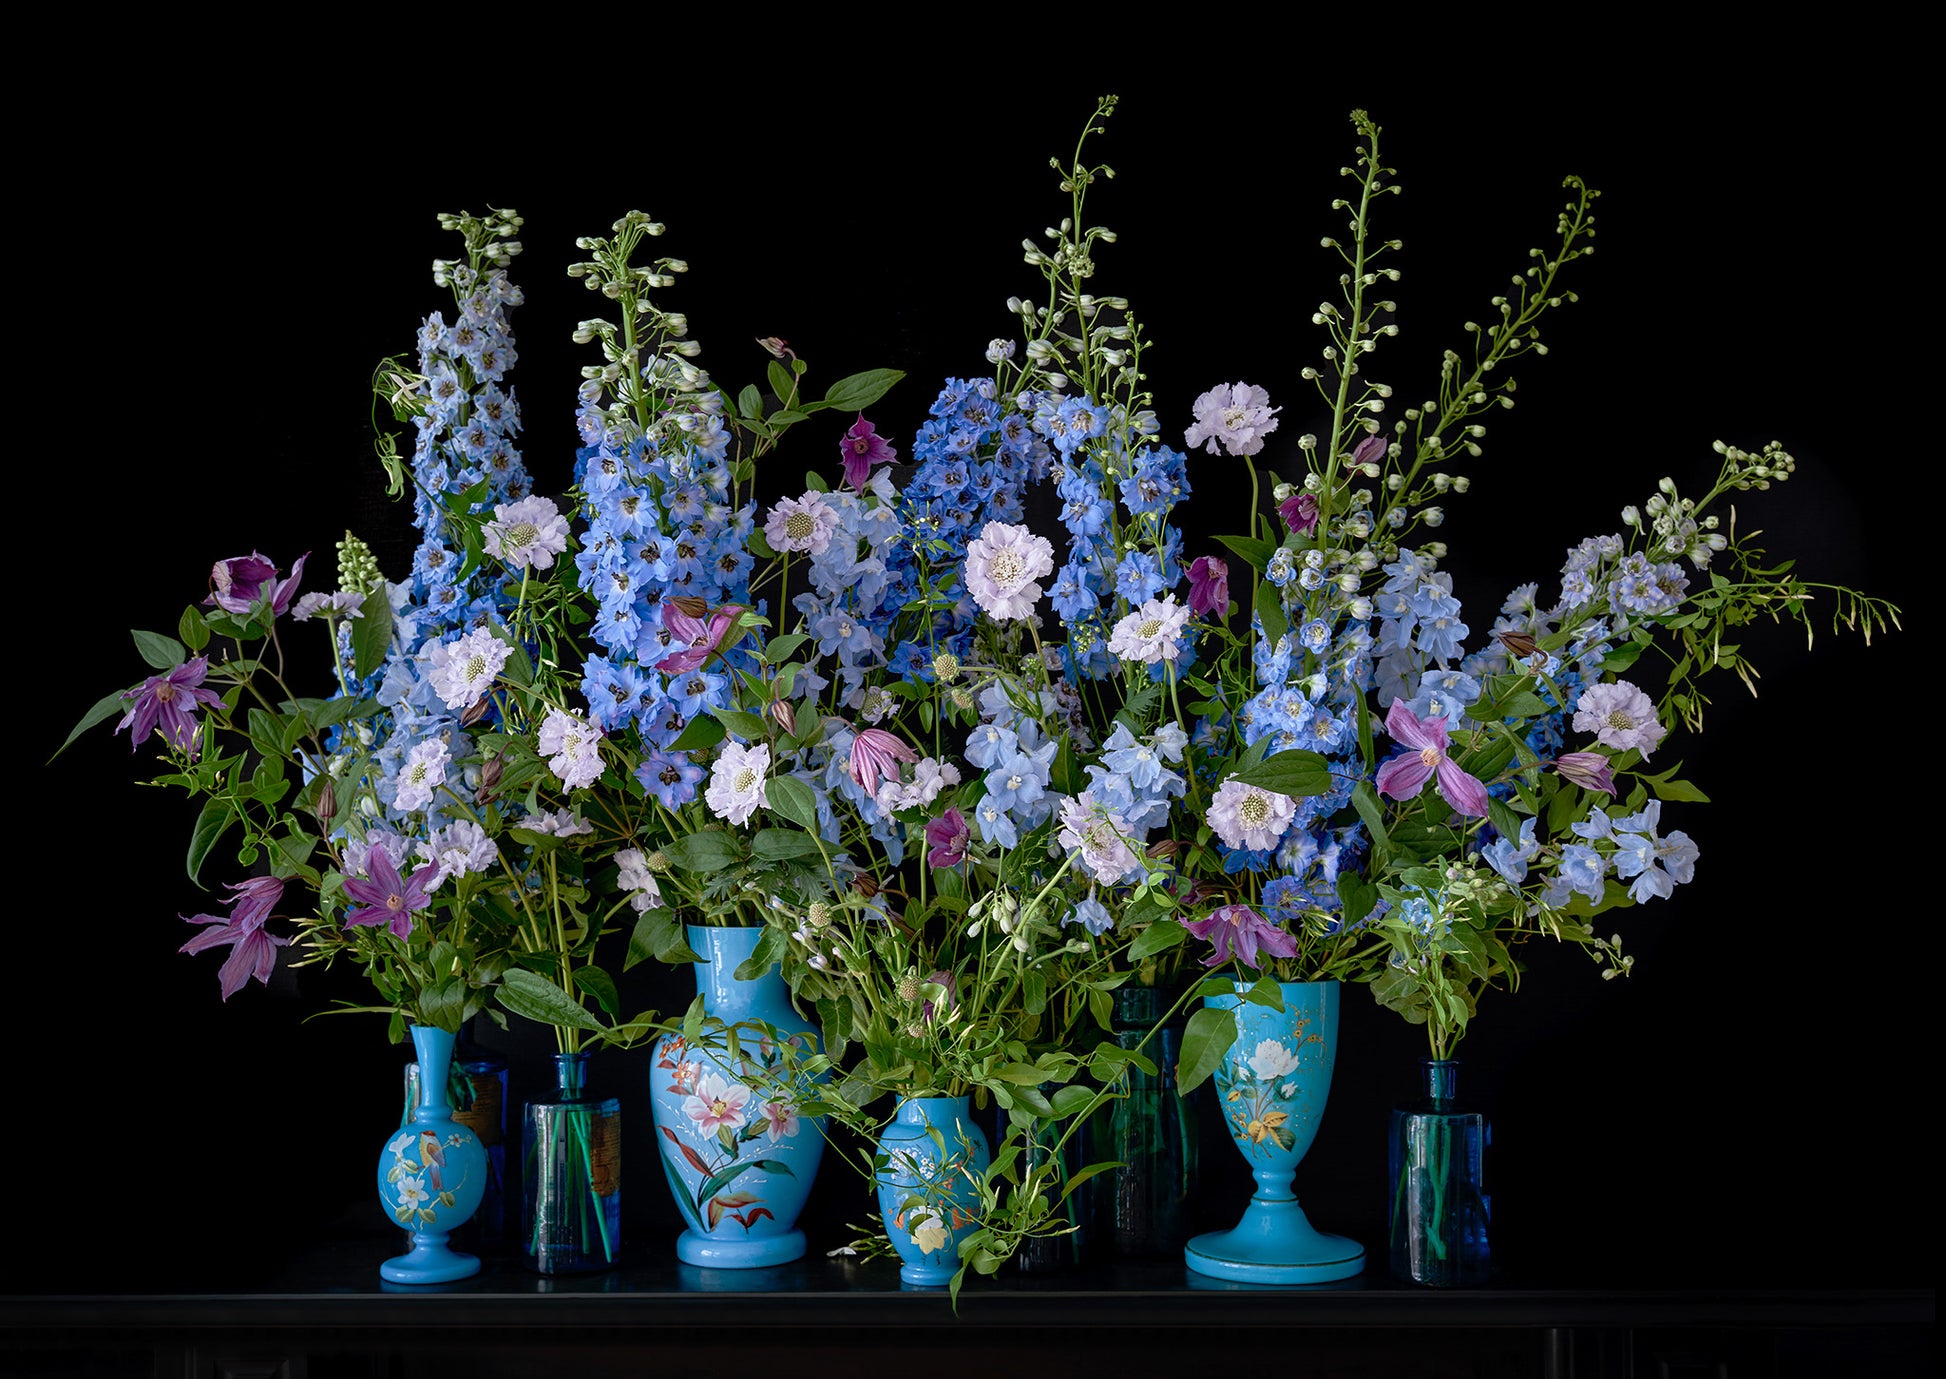 Limited Edition "Delphine" Fine Art Photographic Print, Purple & Blue Flower Arrangement in Hand Painted Vases on s Black Background